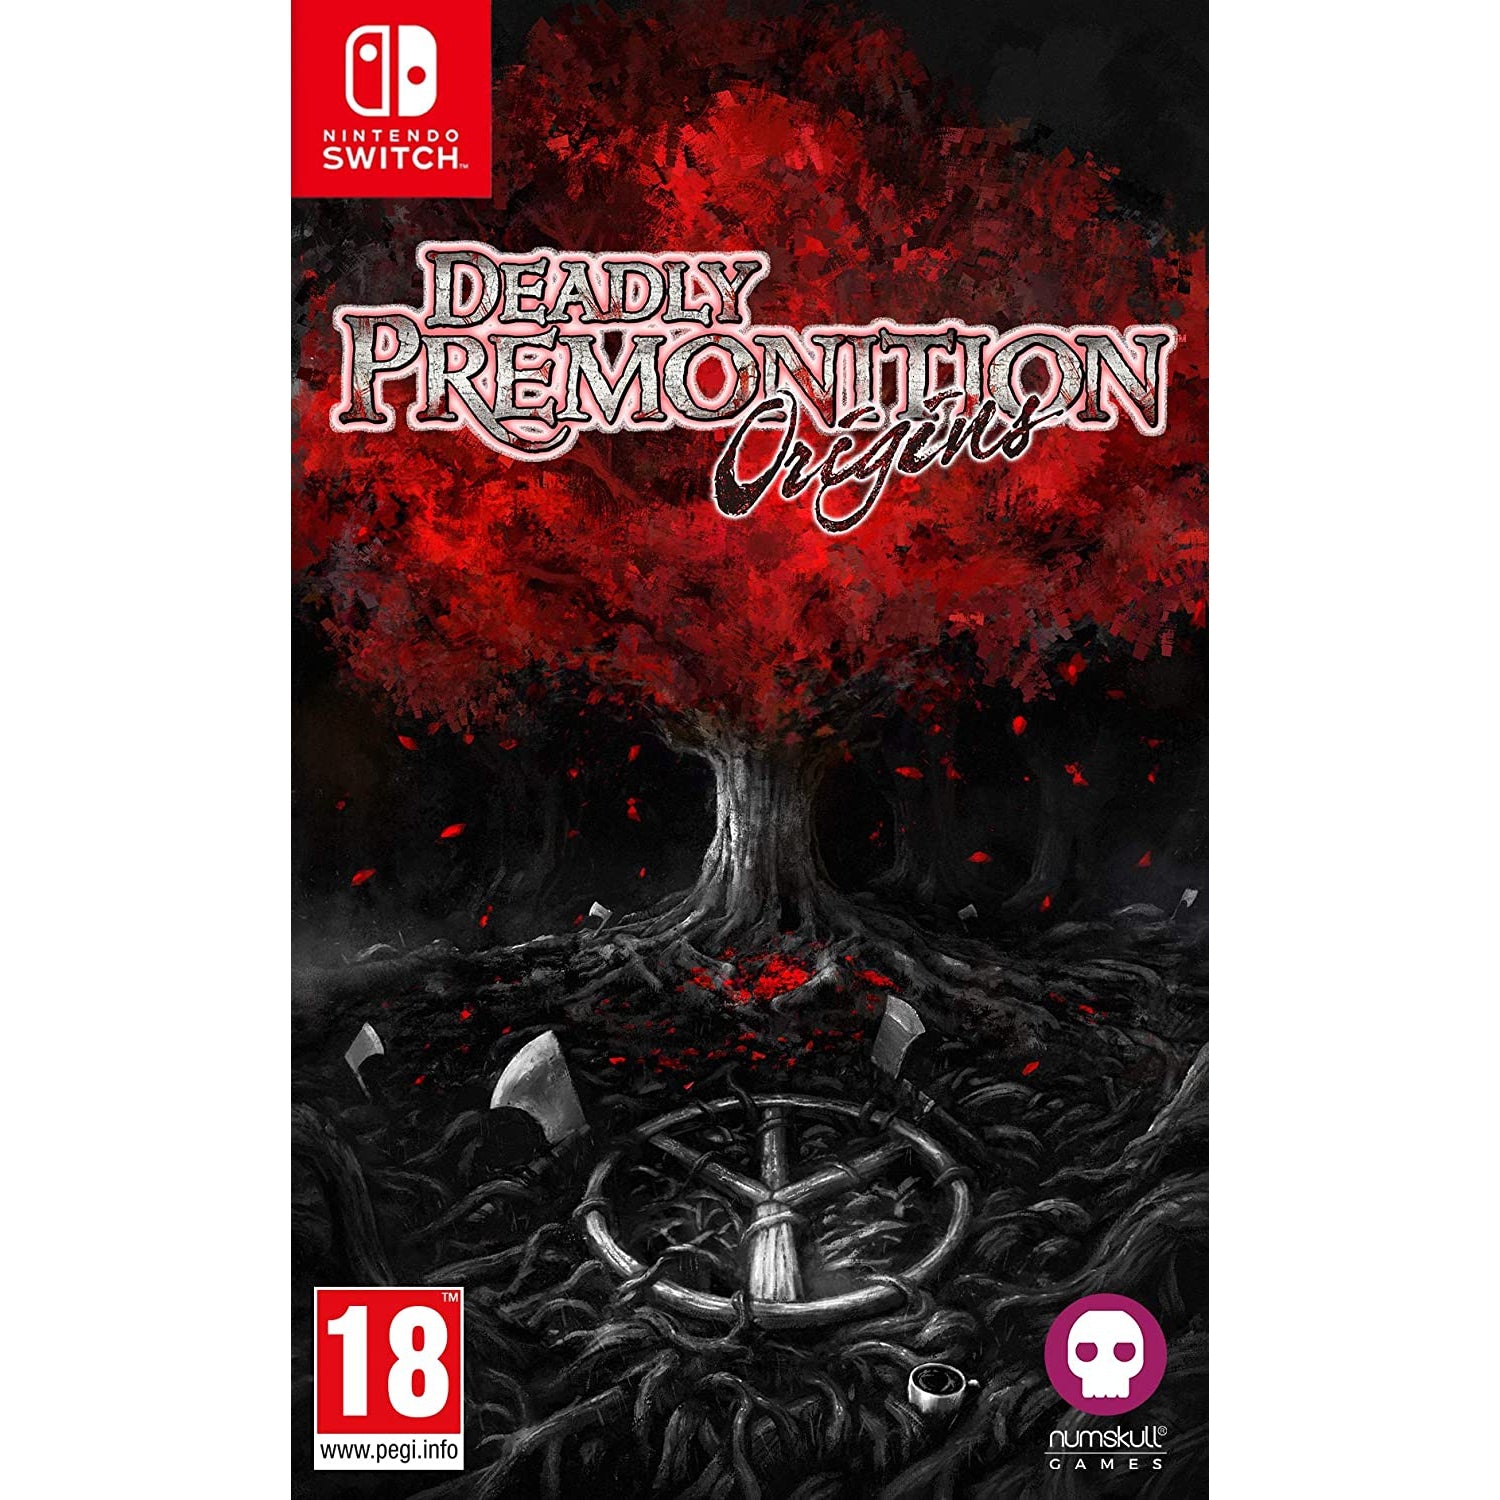 Deadly Premonition: Origins Collector's Edition (Nintendo Switch)